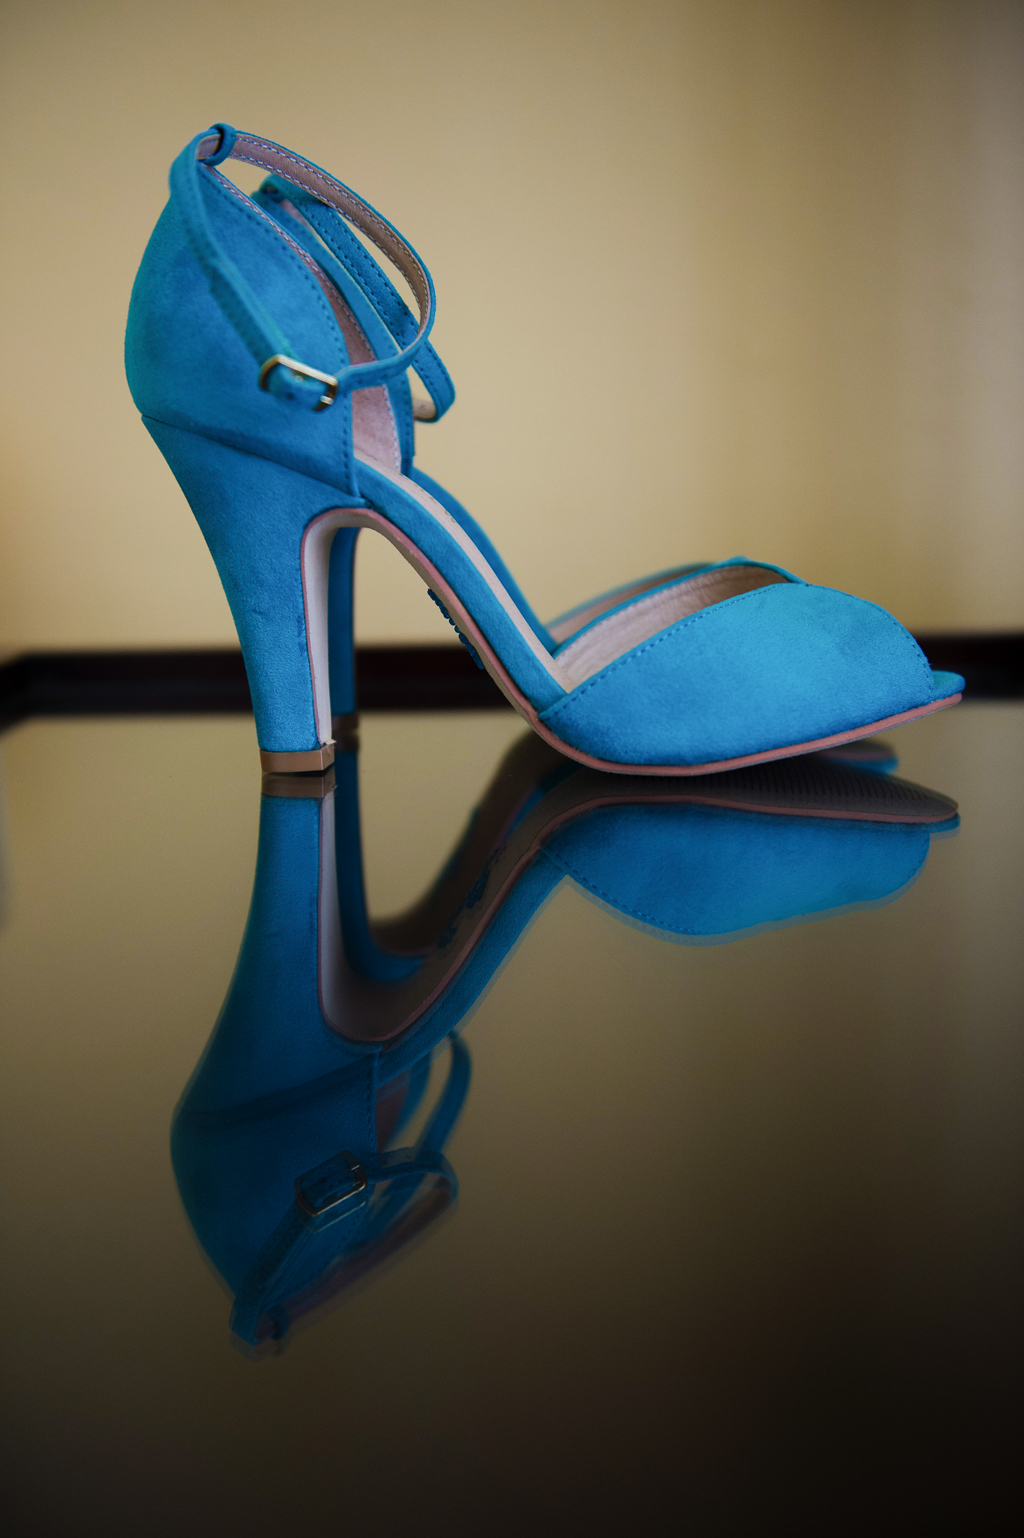 turquoise high heeled wedding shoes reflect on a shiny surface